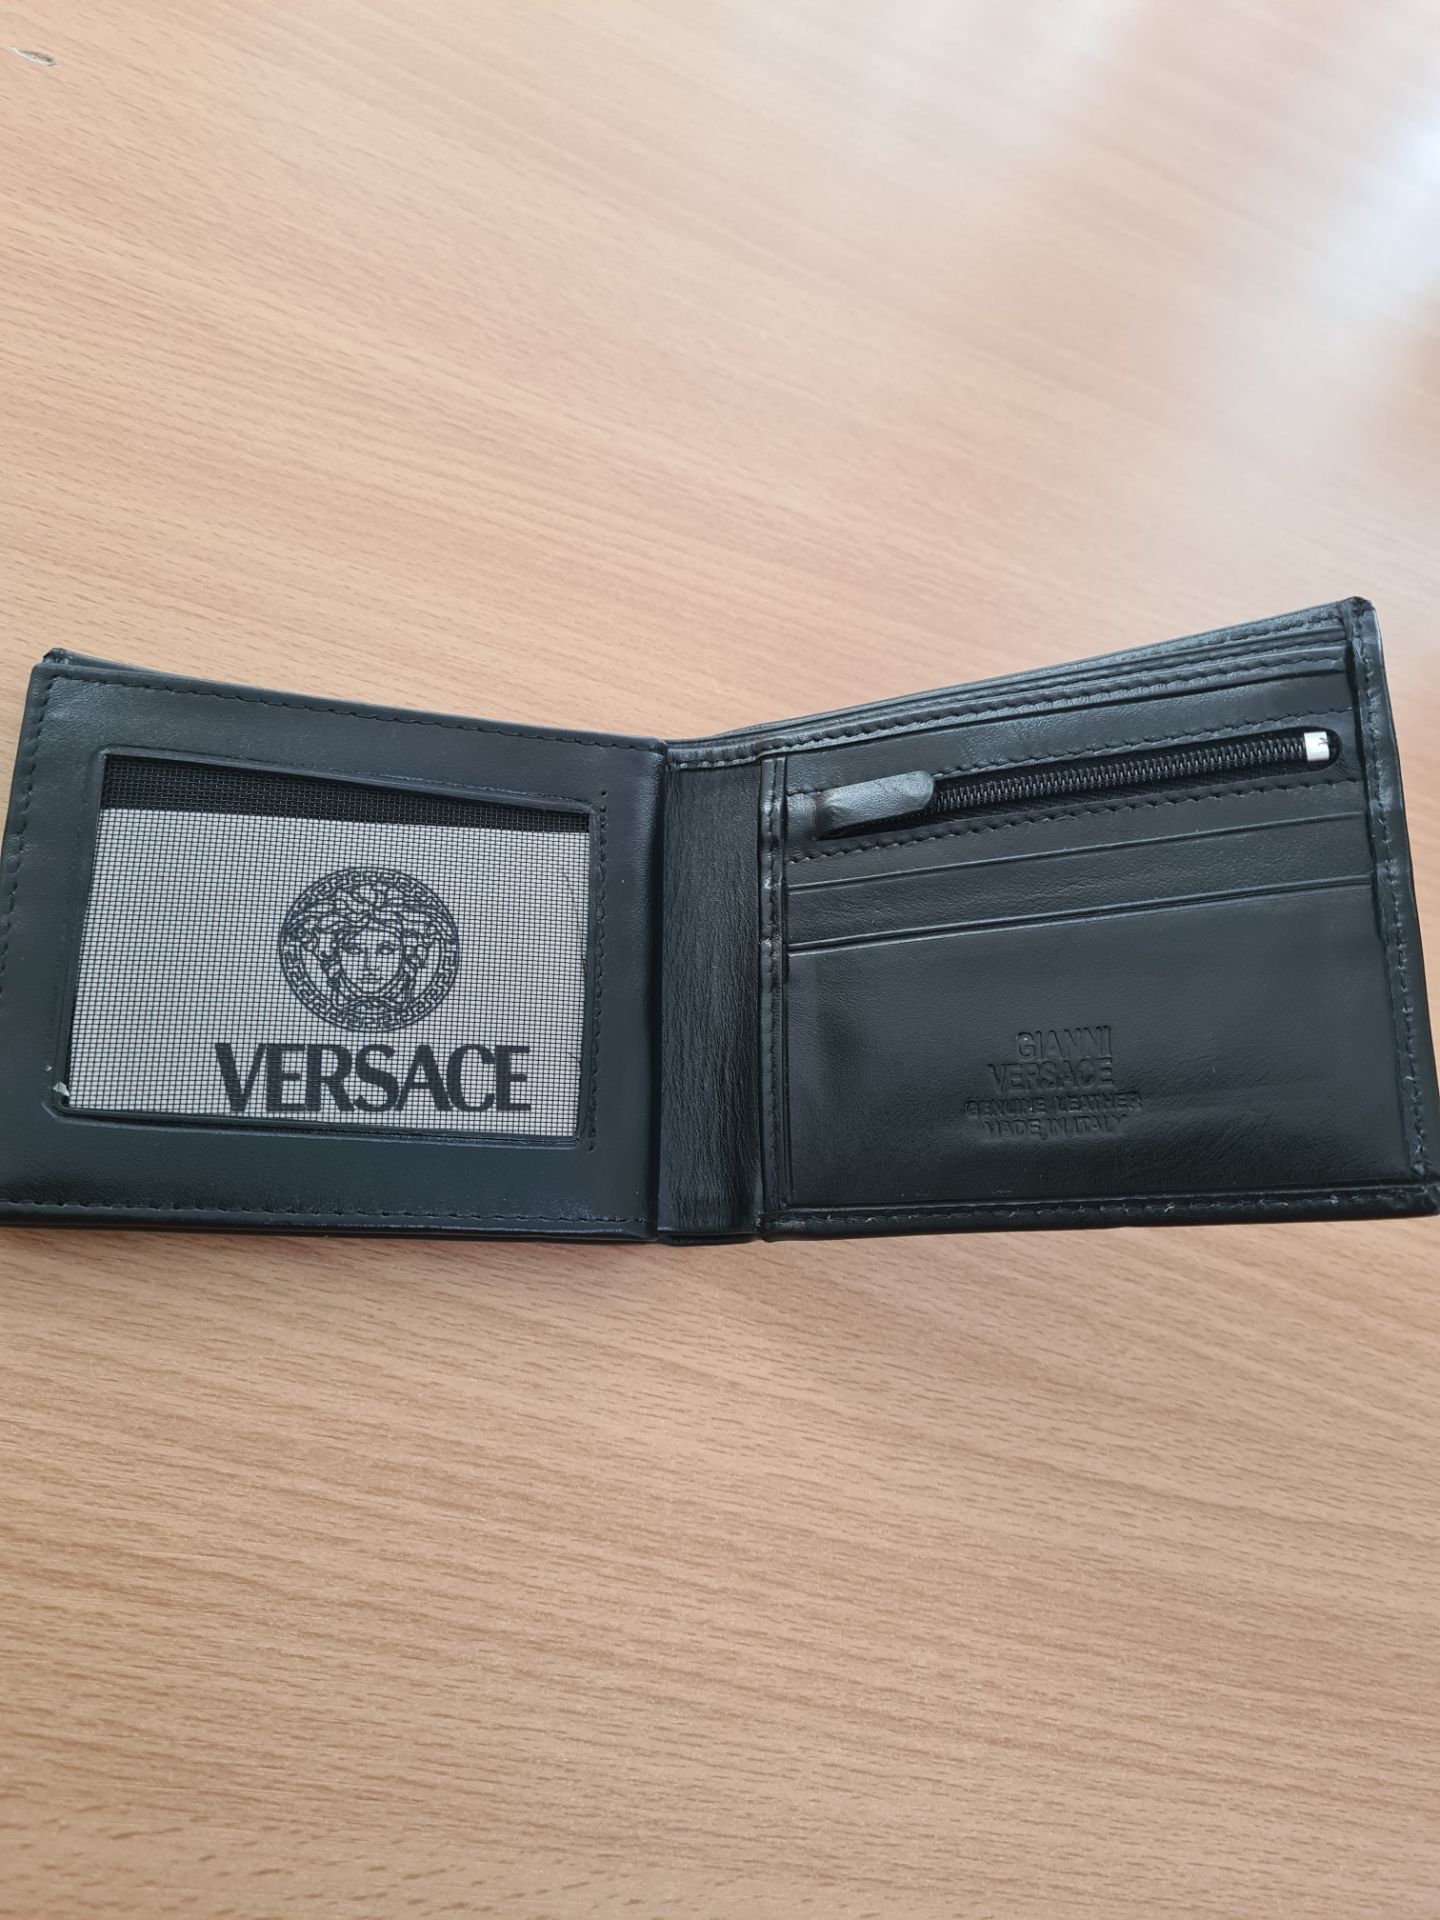 versace men's leather wallet - new with box - Bild 7 aus 8